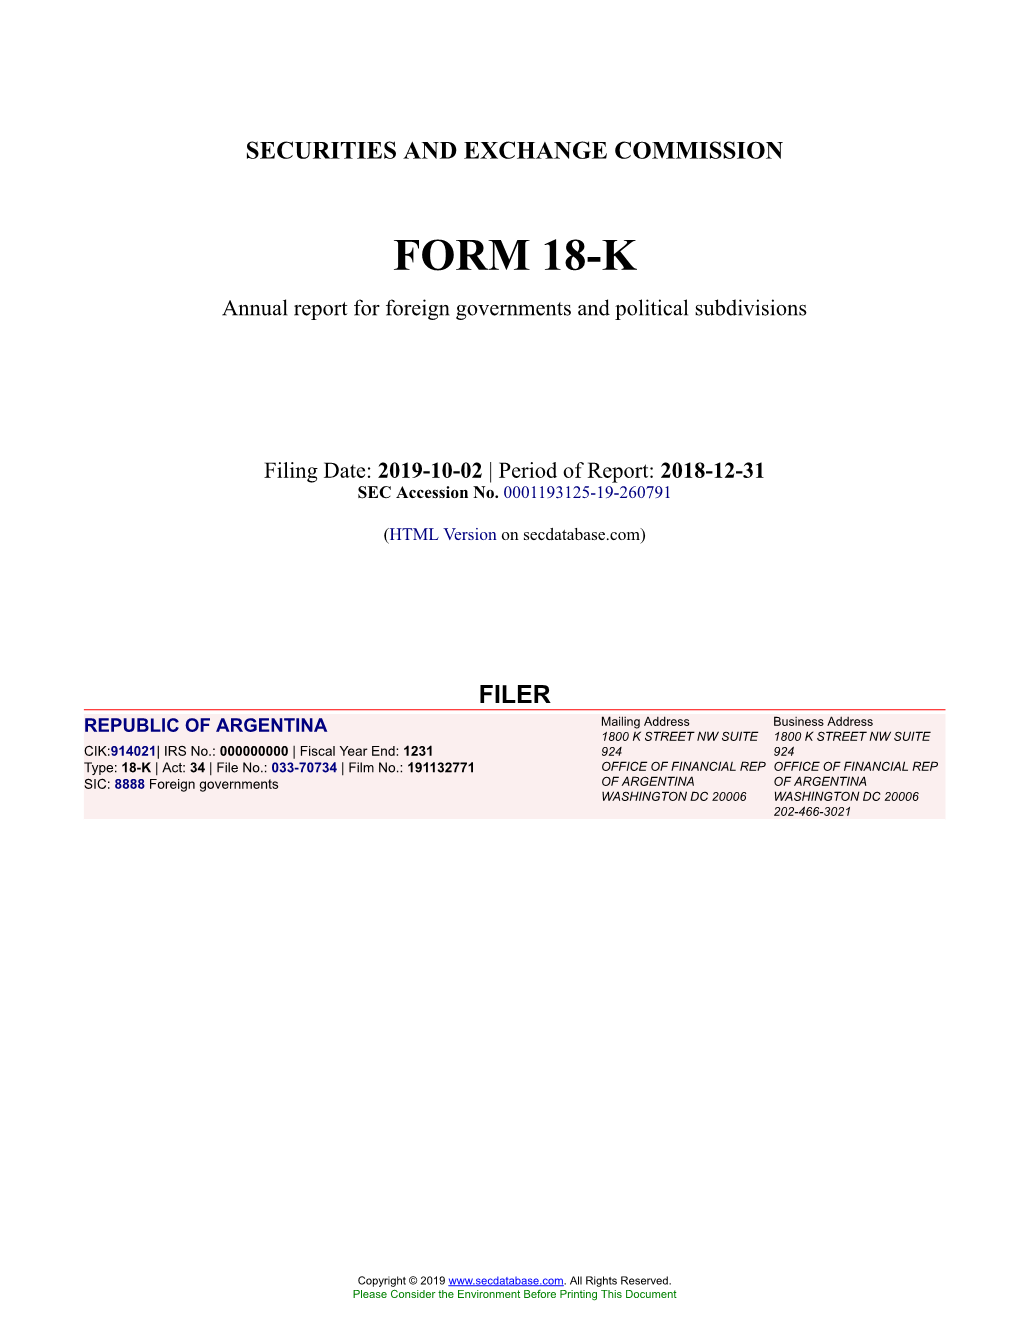 REPUBLIC of ARGENTINA Form 18-K Filed 2019-10-02